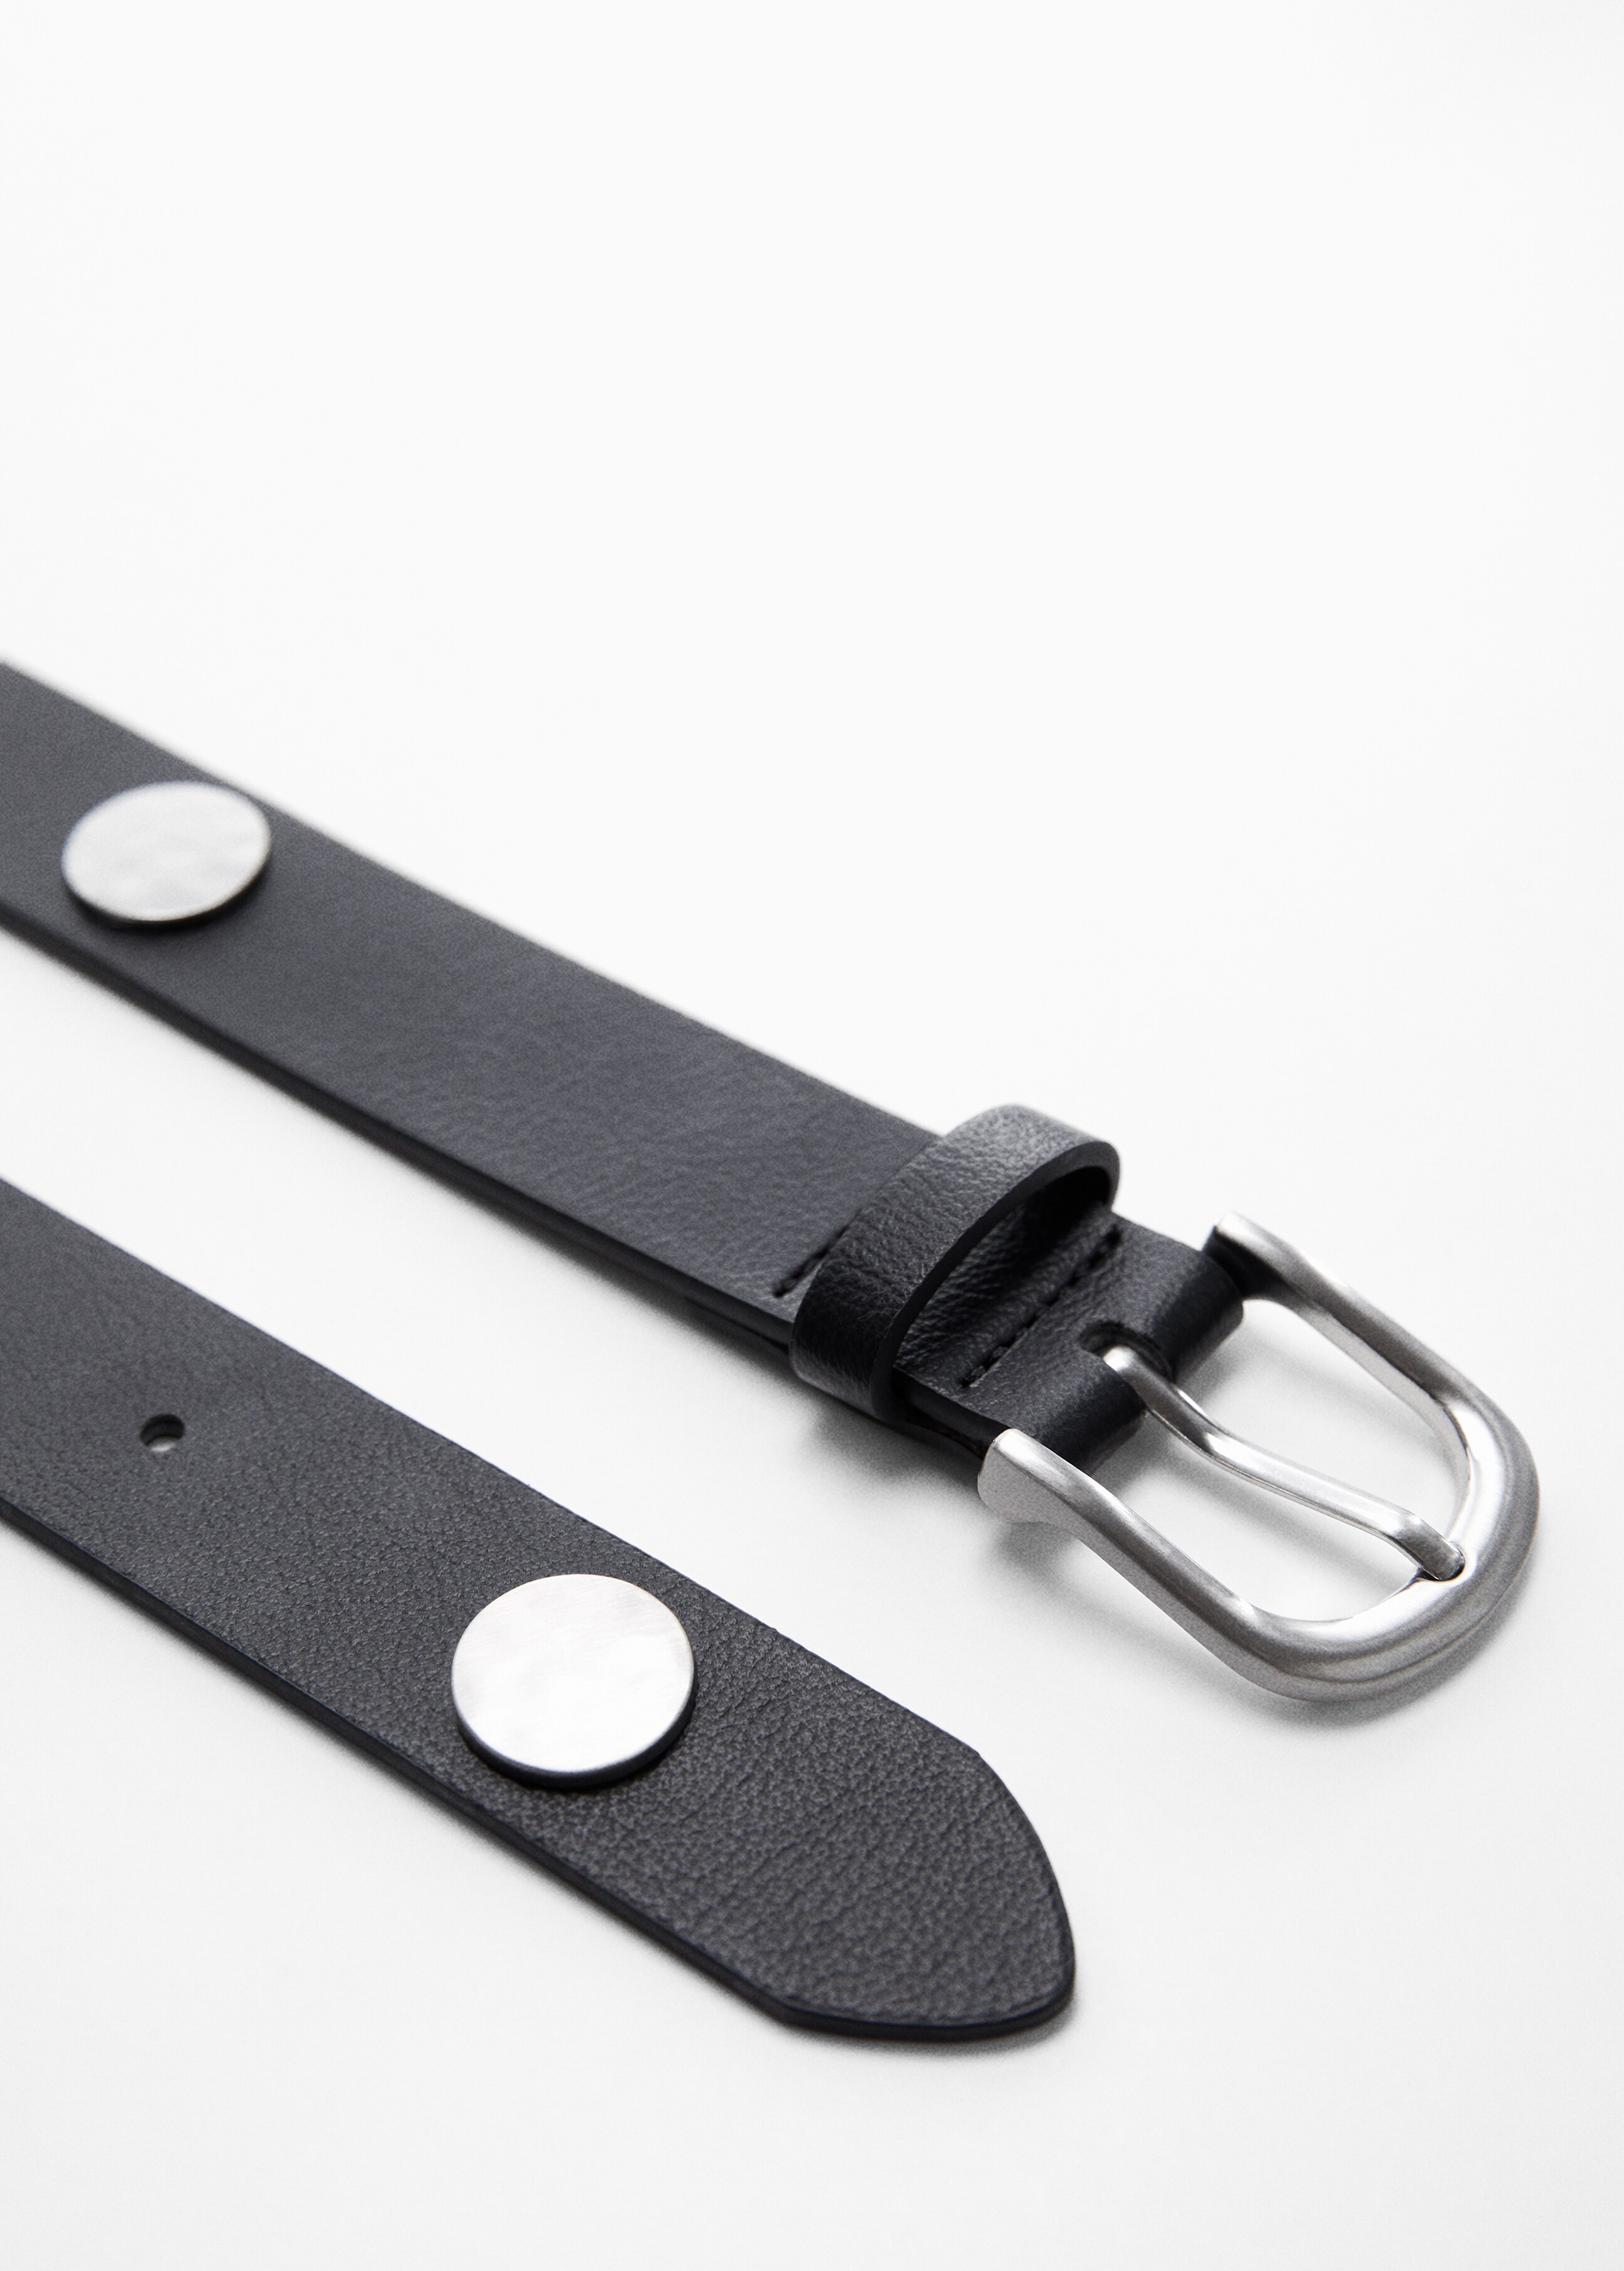 Metal appliqué belt - Details of the article 1